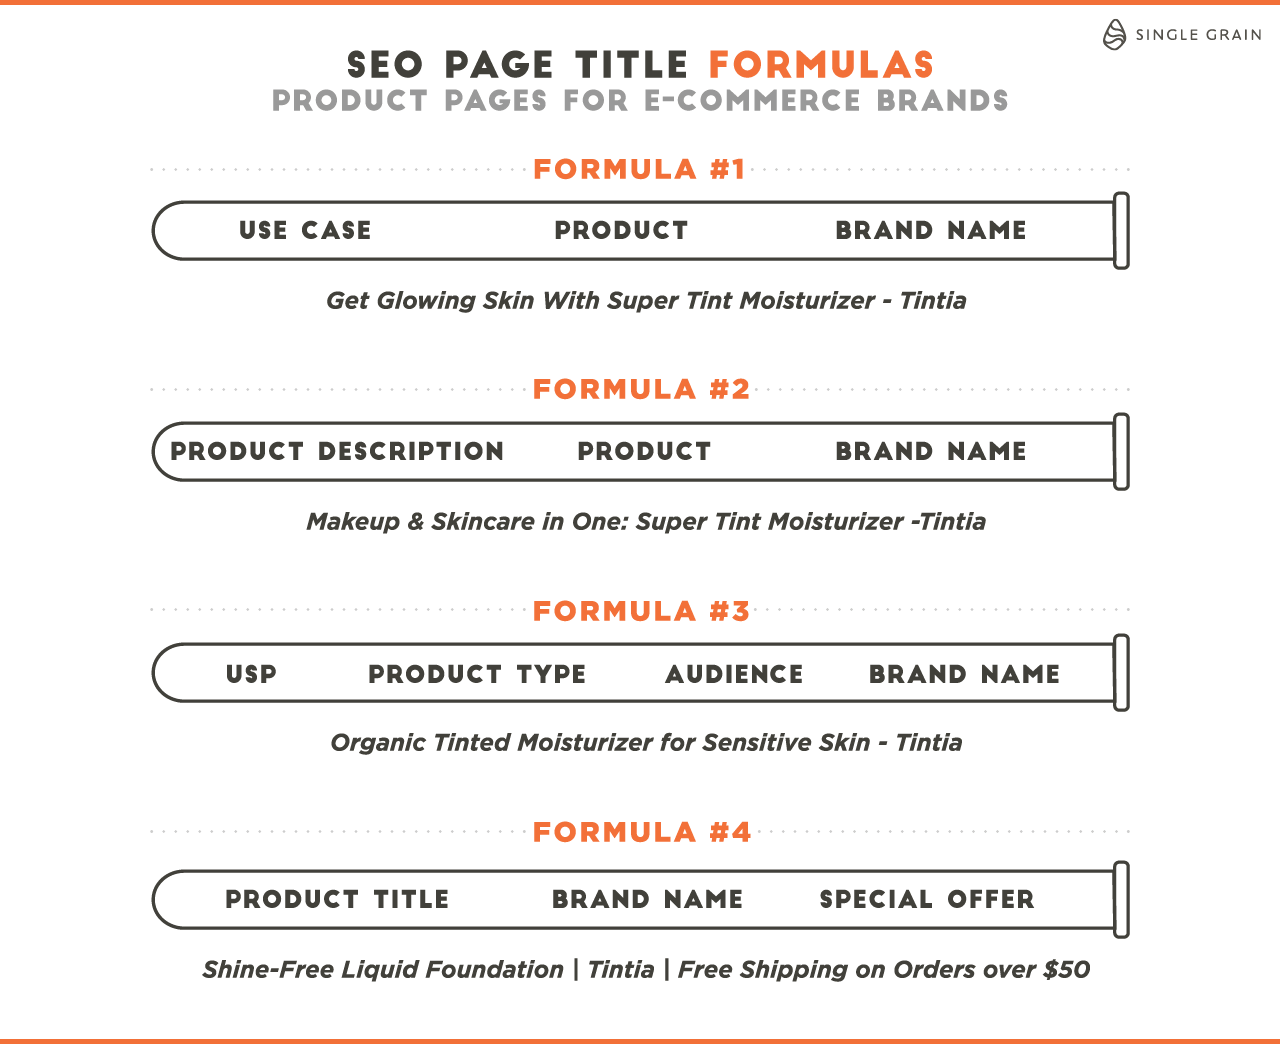 Product Pages SEO Title Formulas